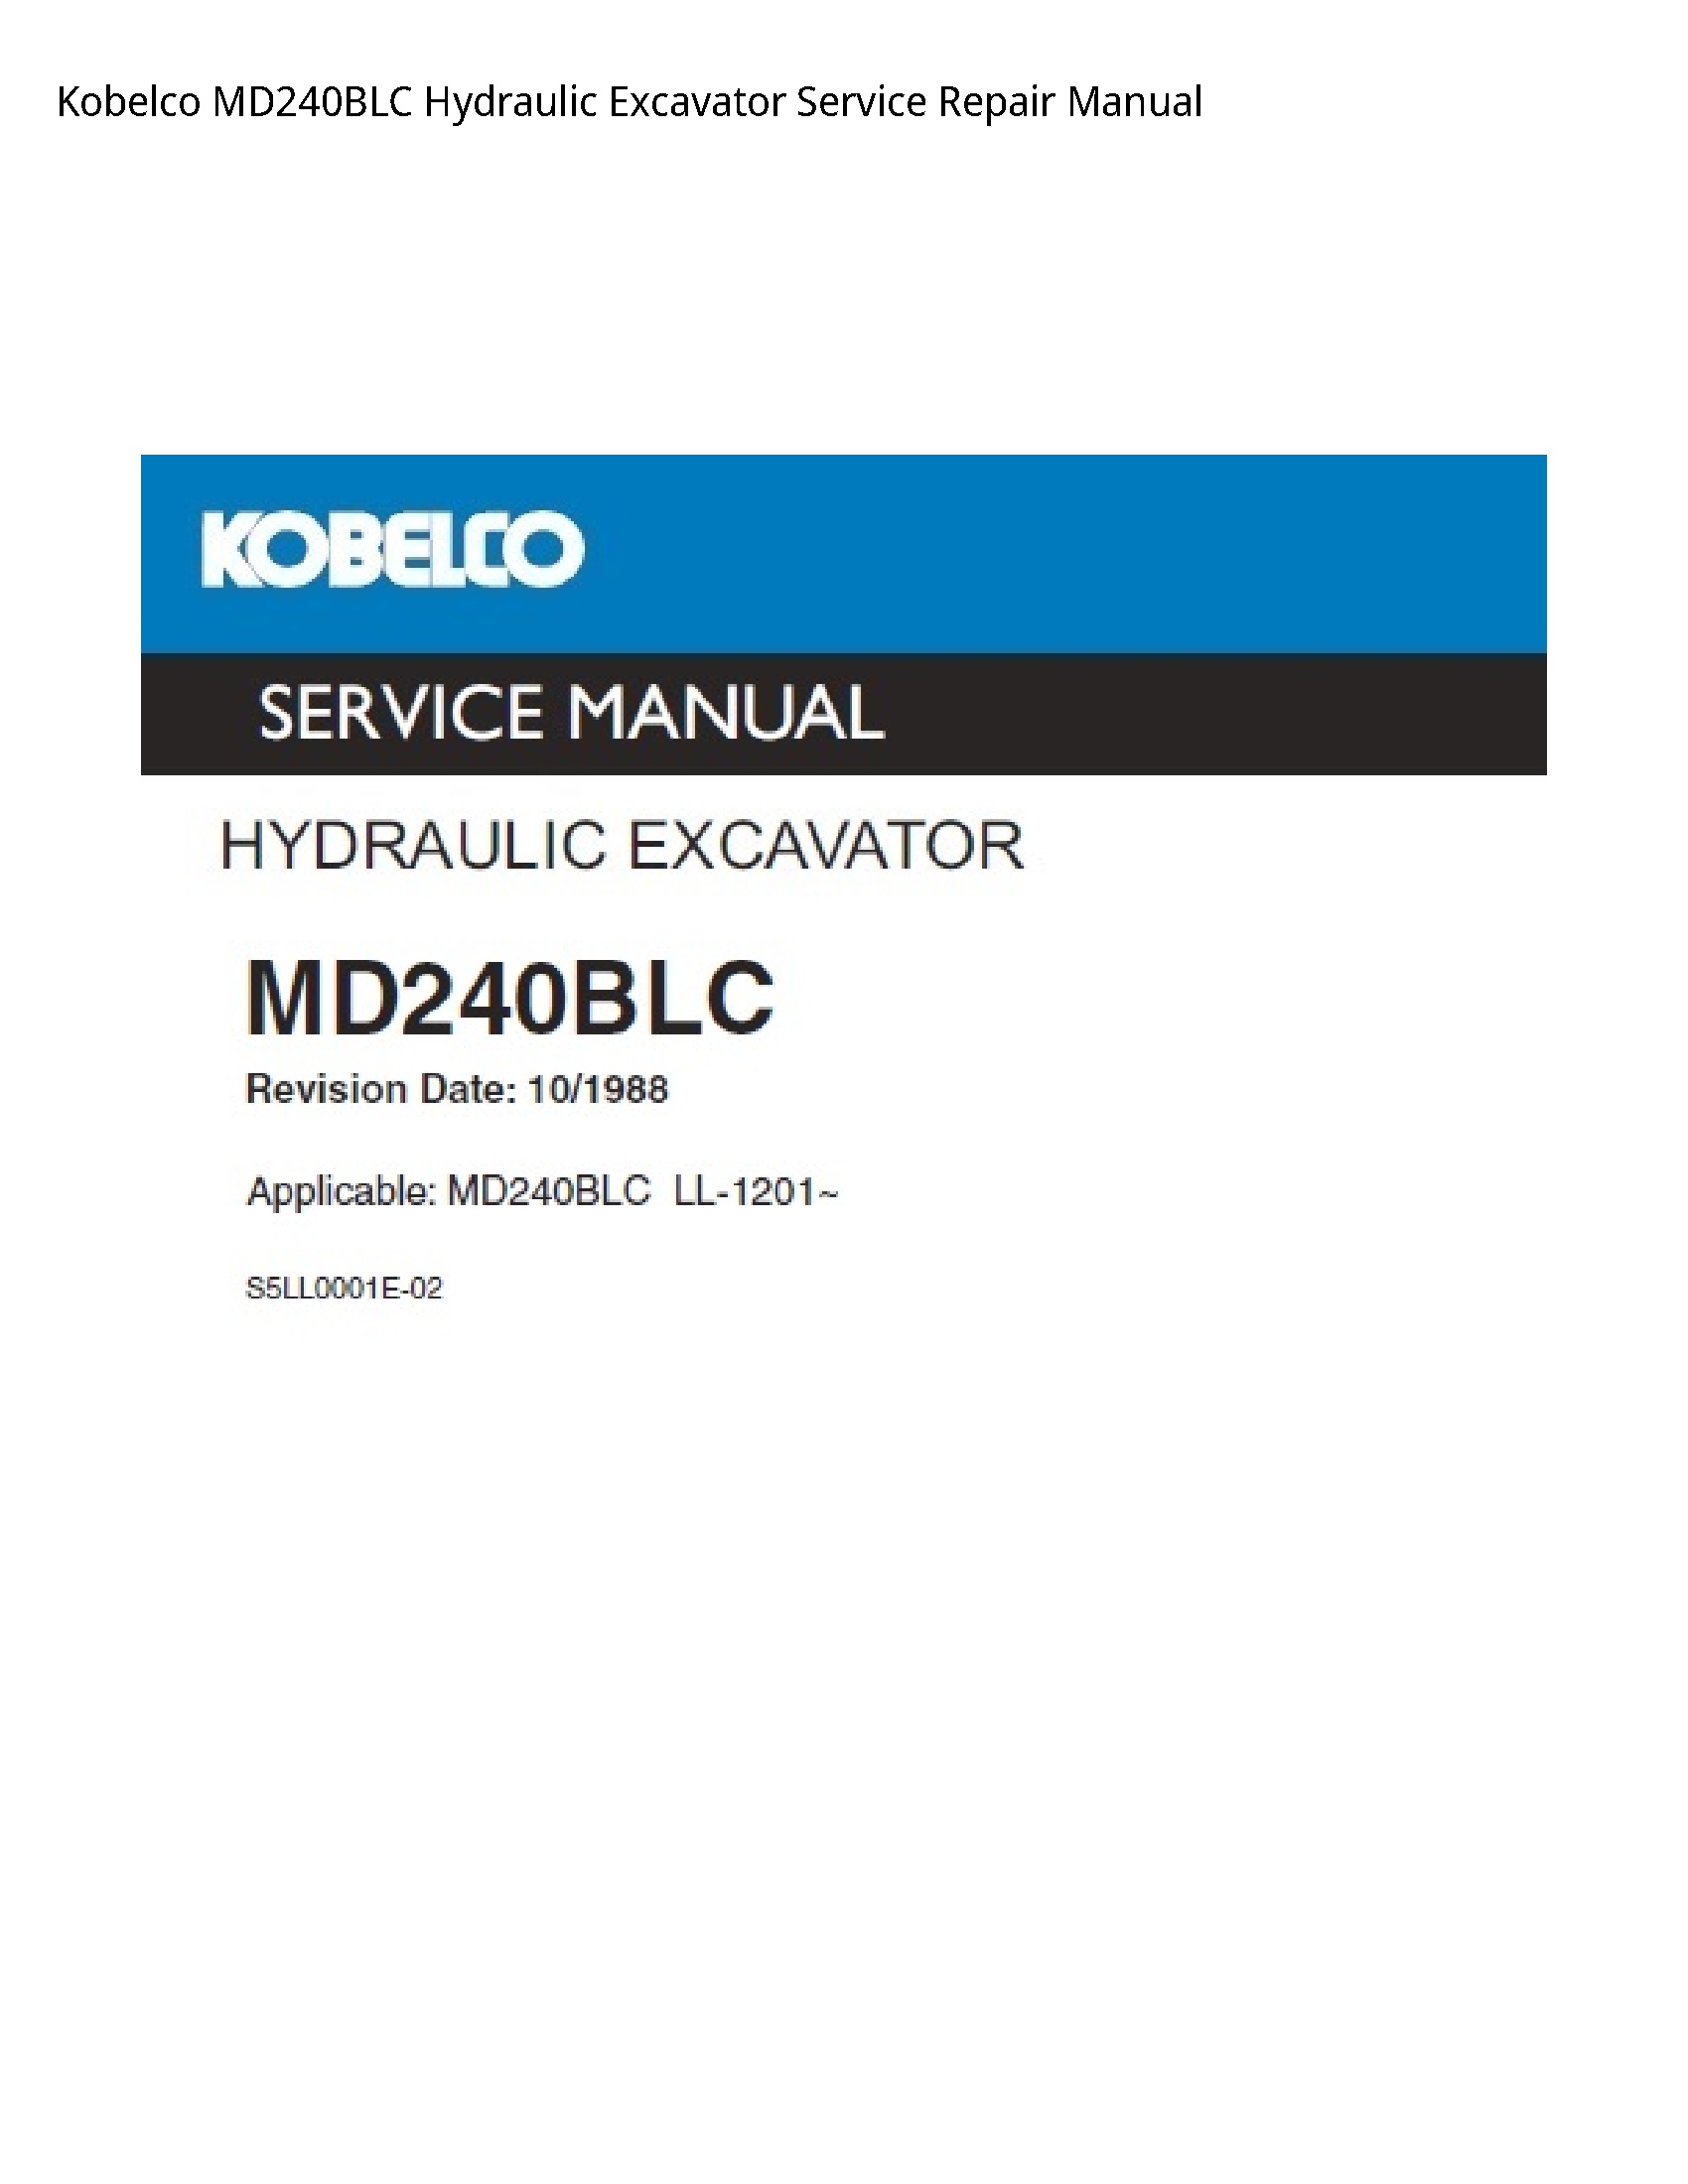 Kobelco MD240BLC Hydraulic Excavator manual